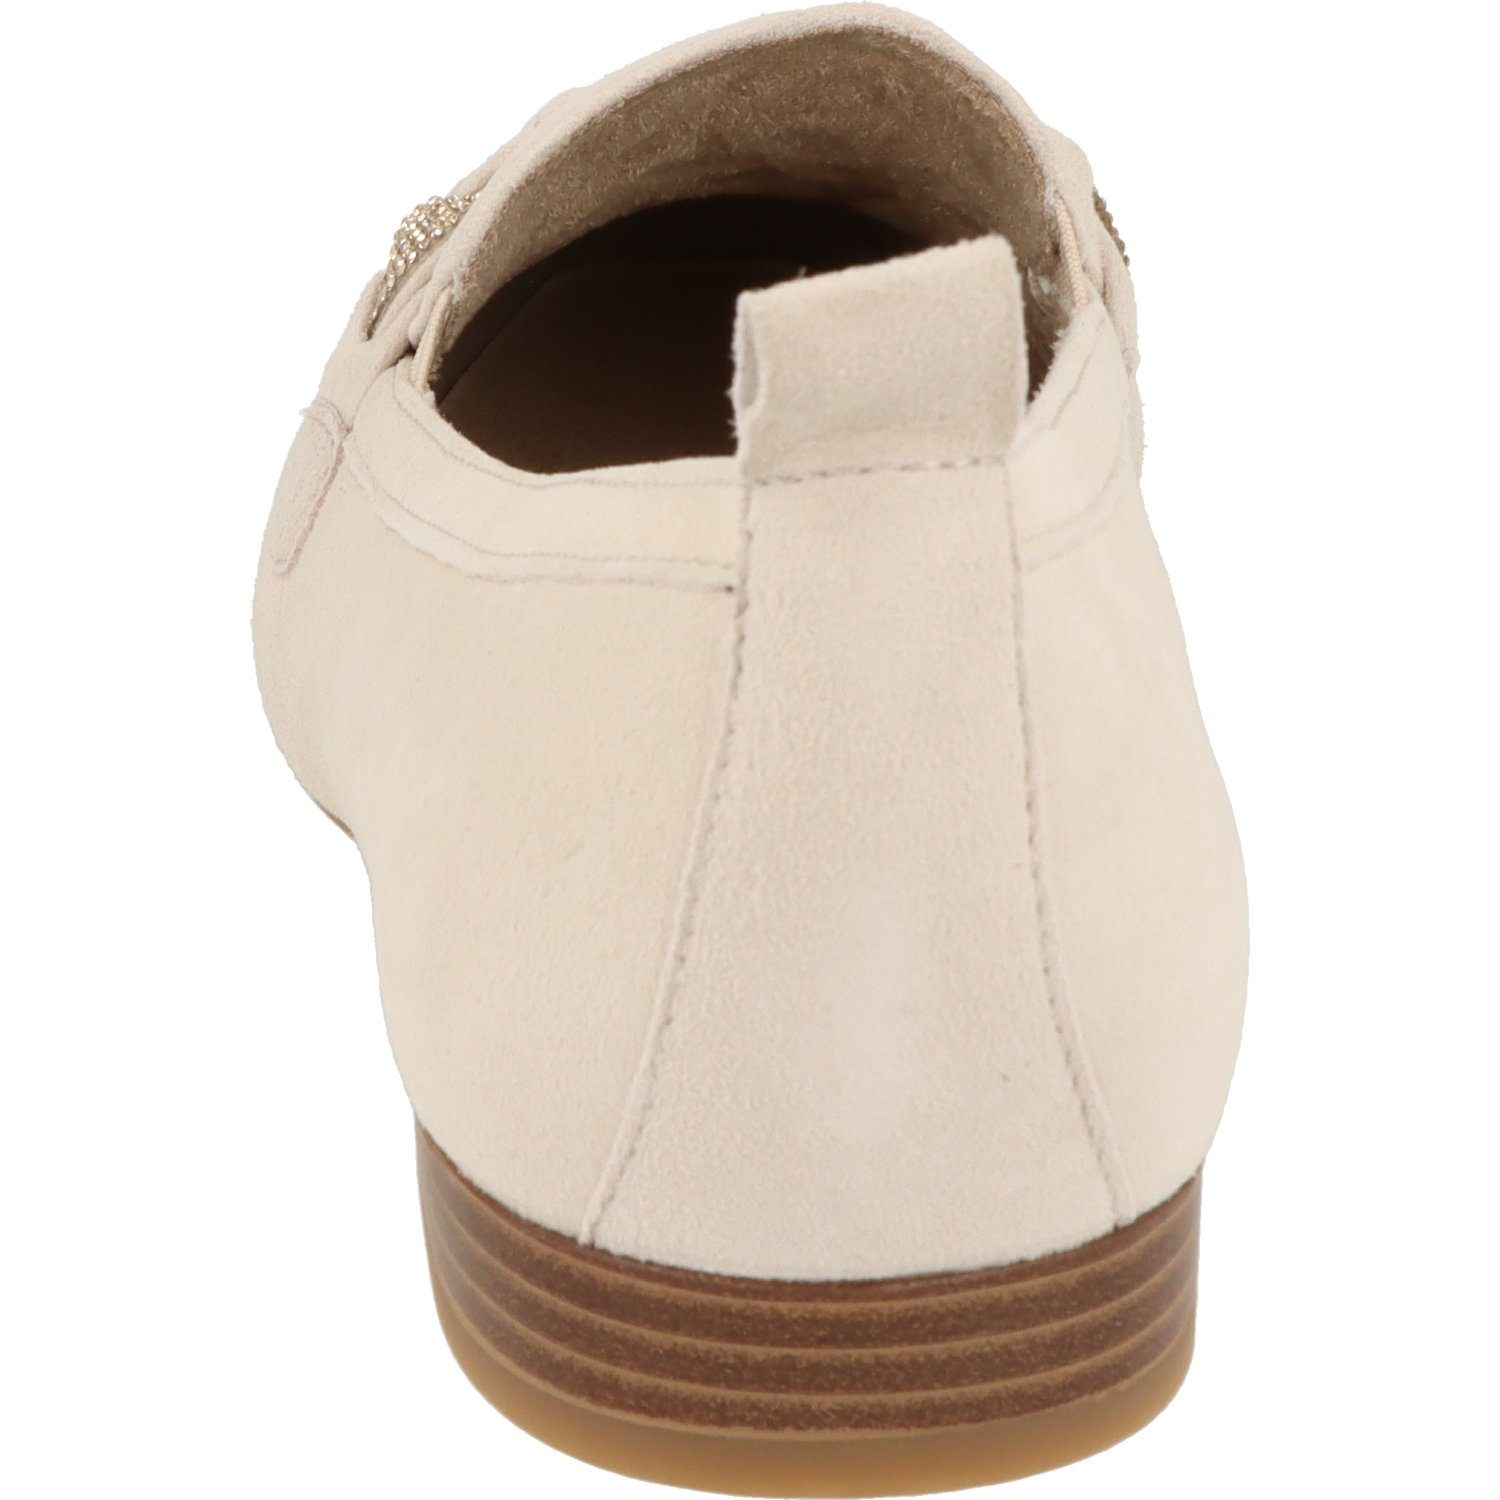 Comfort bequeme Slipper Damen Tamaris Schuhe 8-84200-20 COMFORT Taupe Comfort Slipper Fit